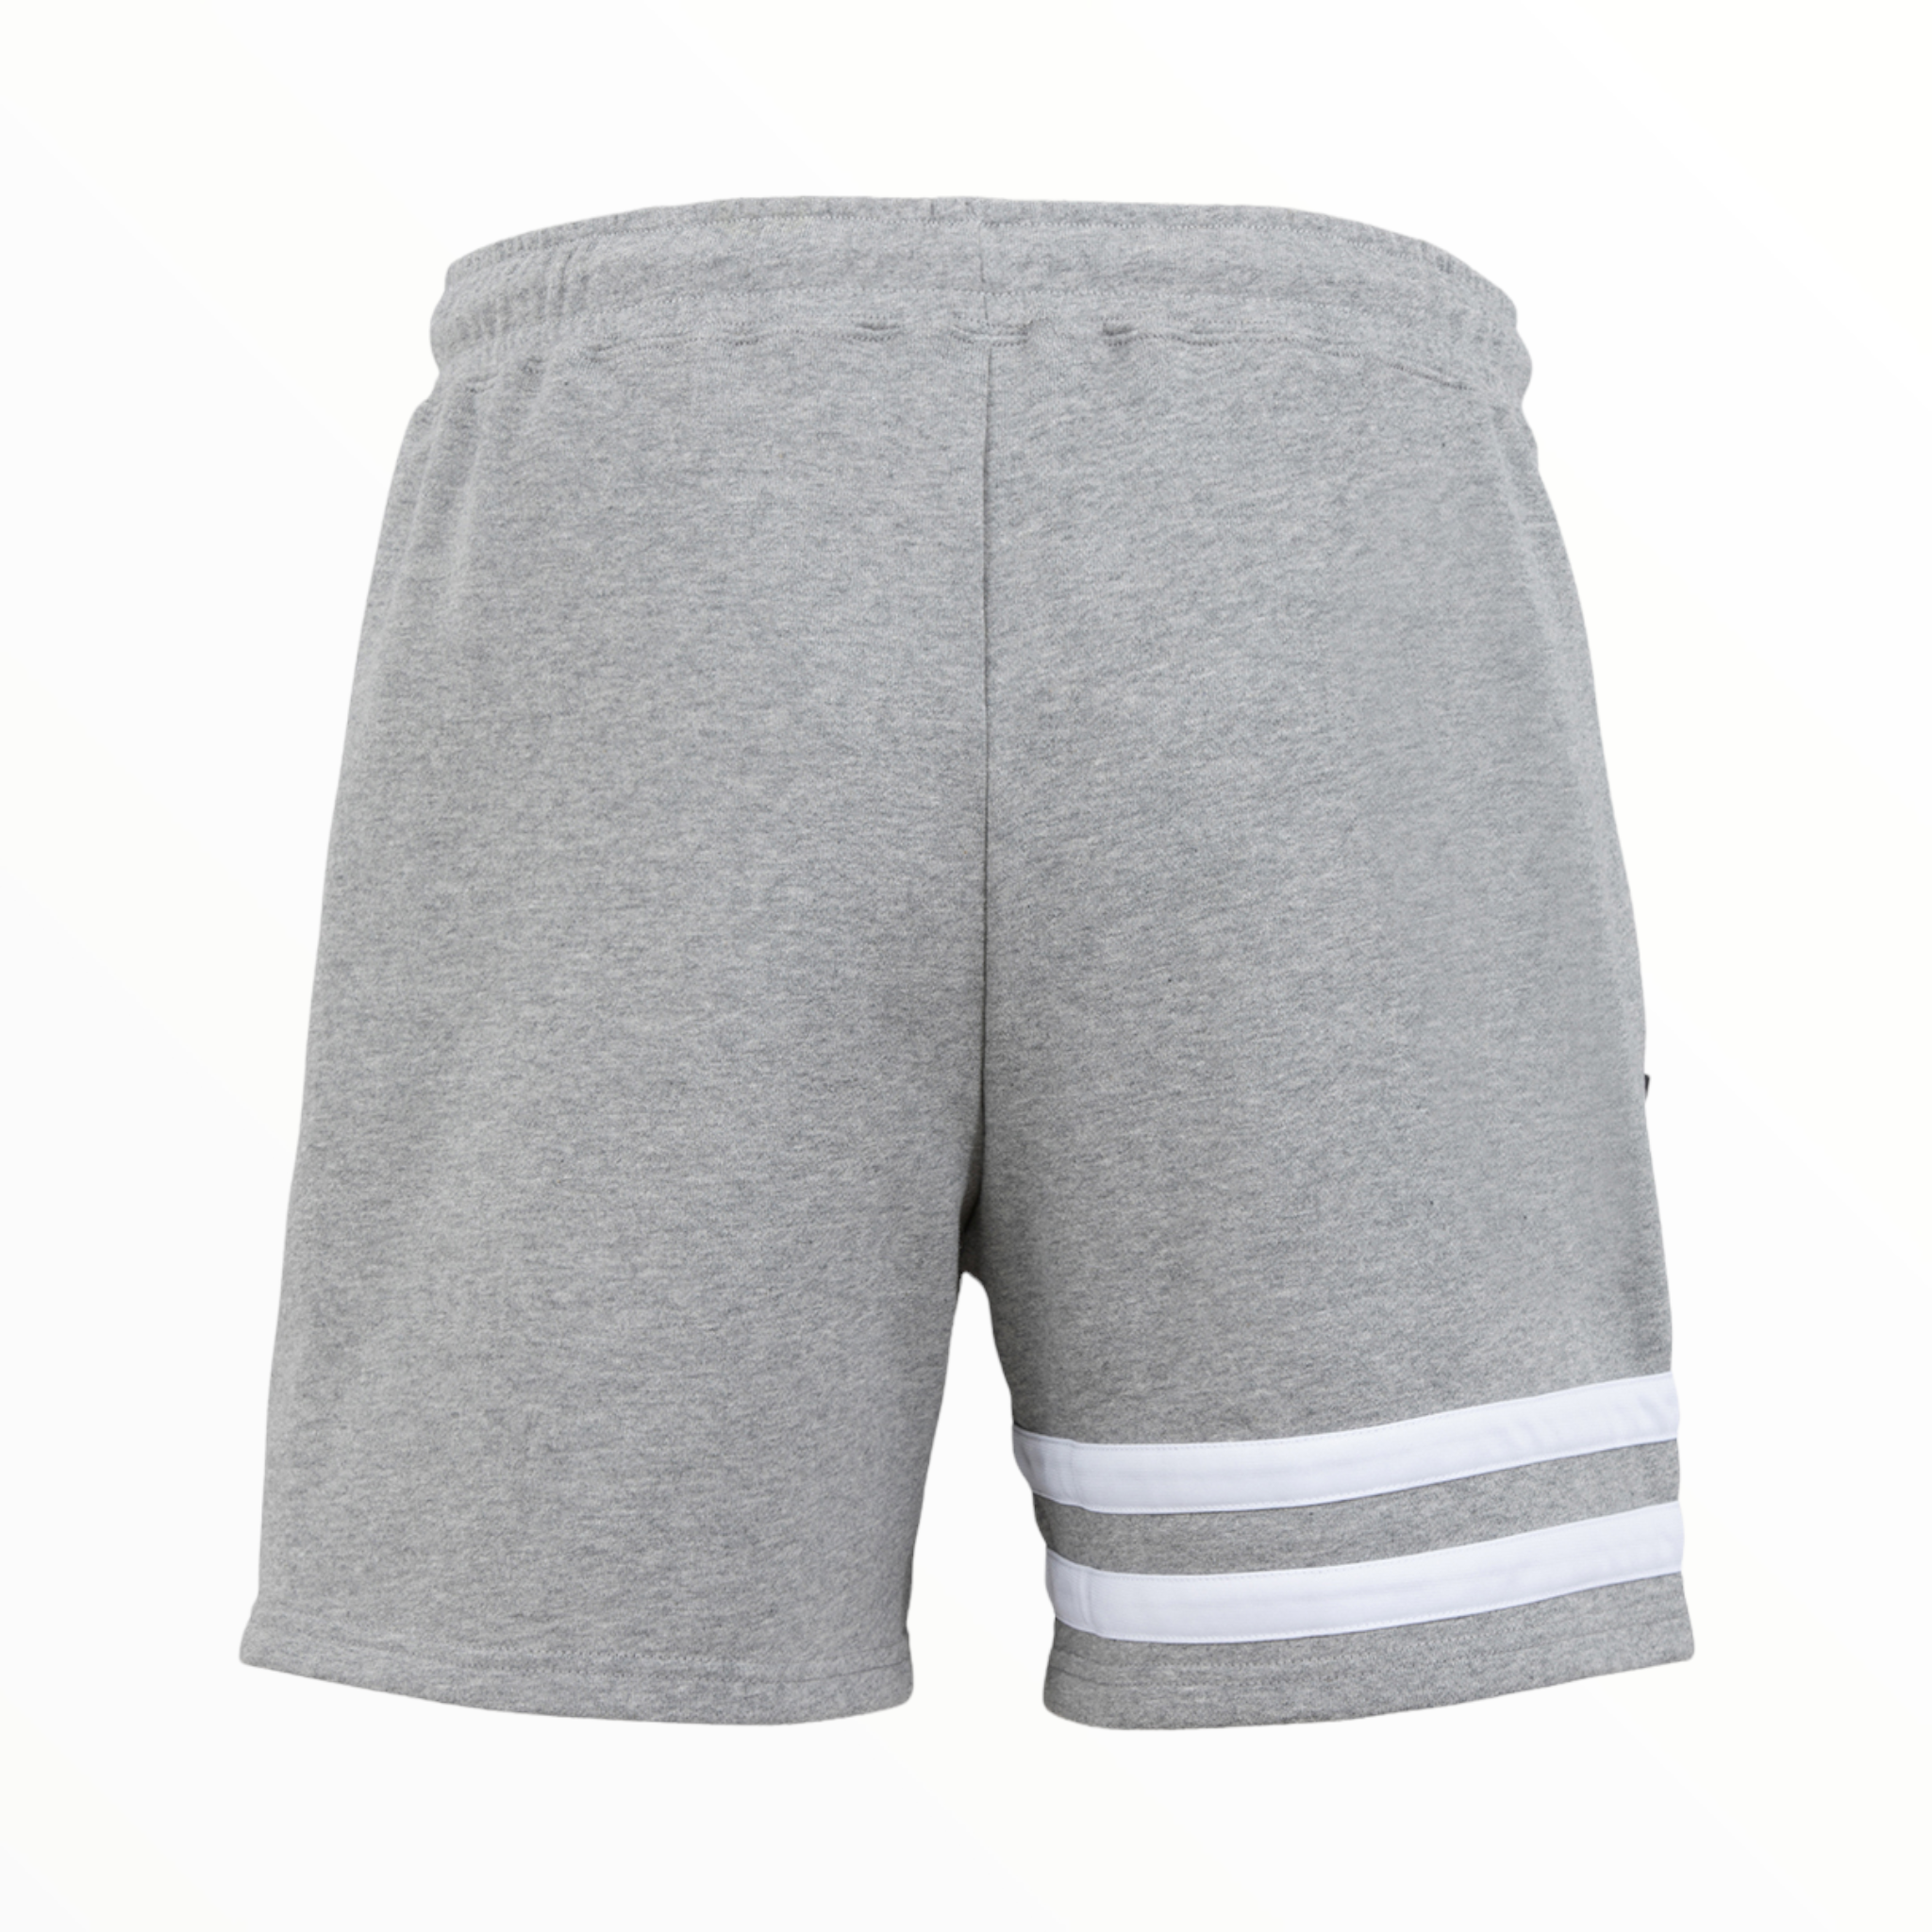 DMWU Cotton Shorts Grey Melange - Unfair Athletics